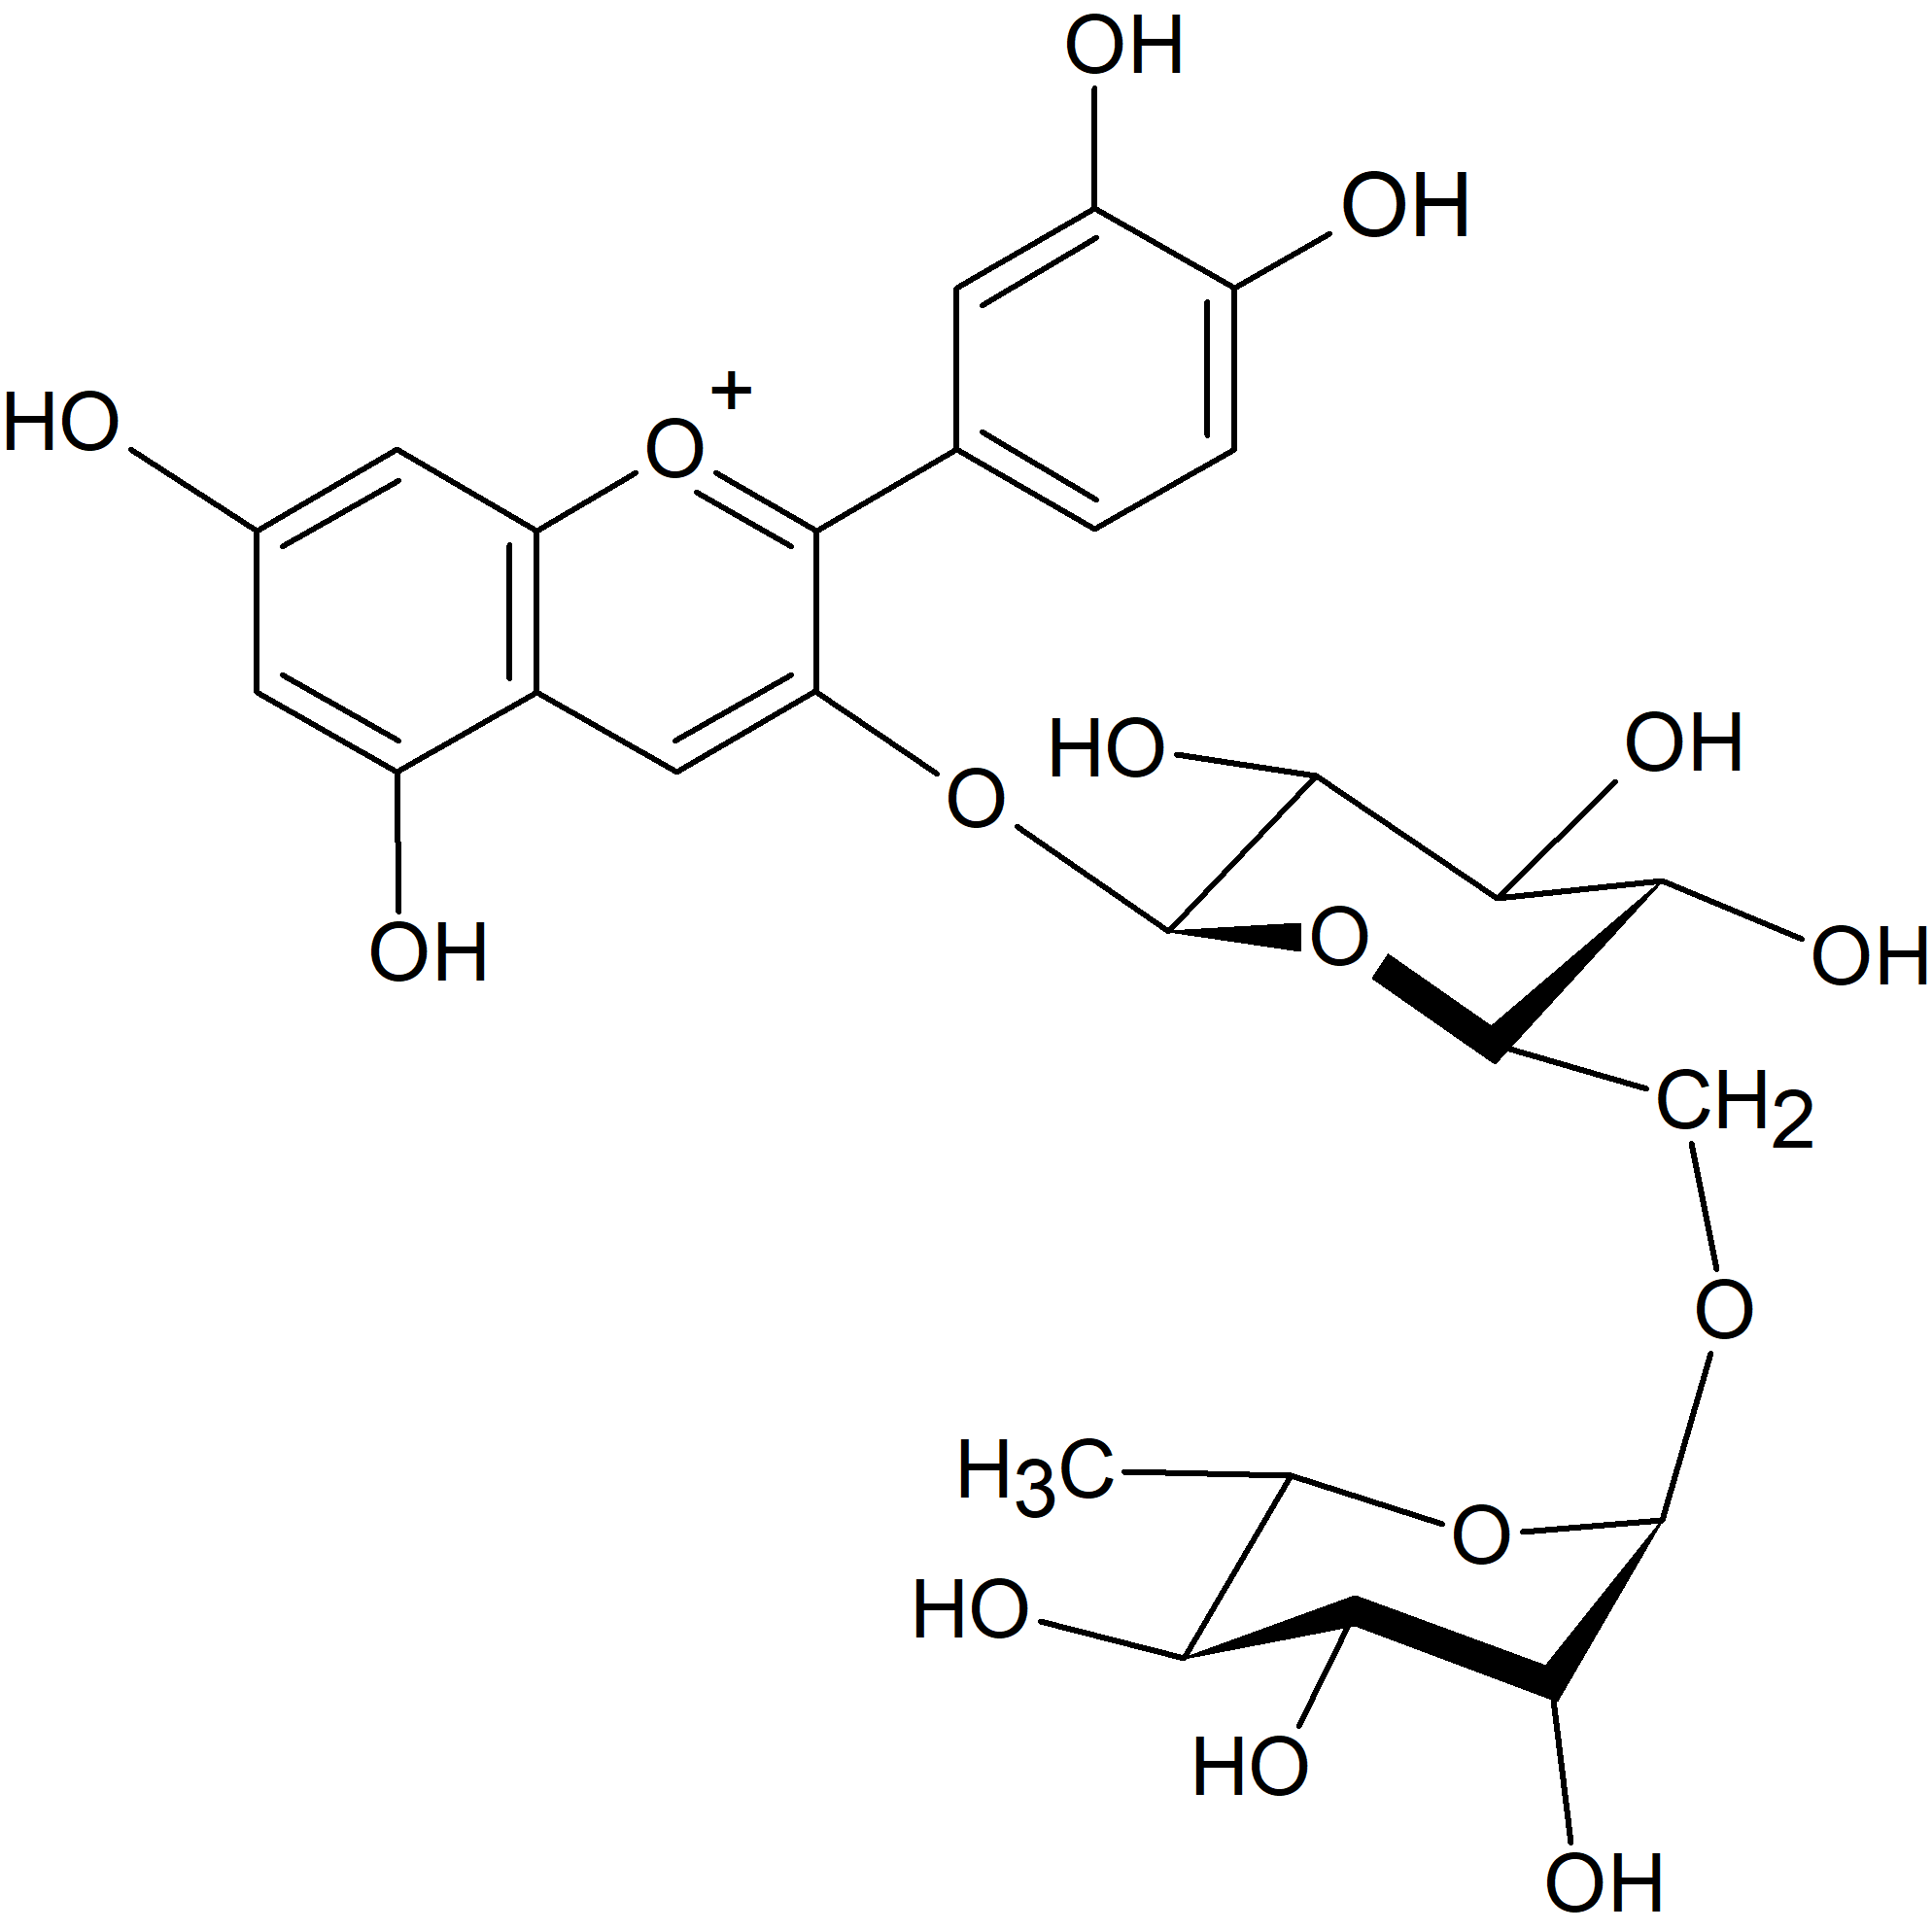 Cyanidin 3-O-rutinoside